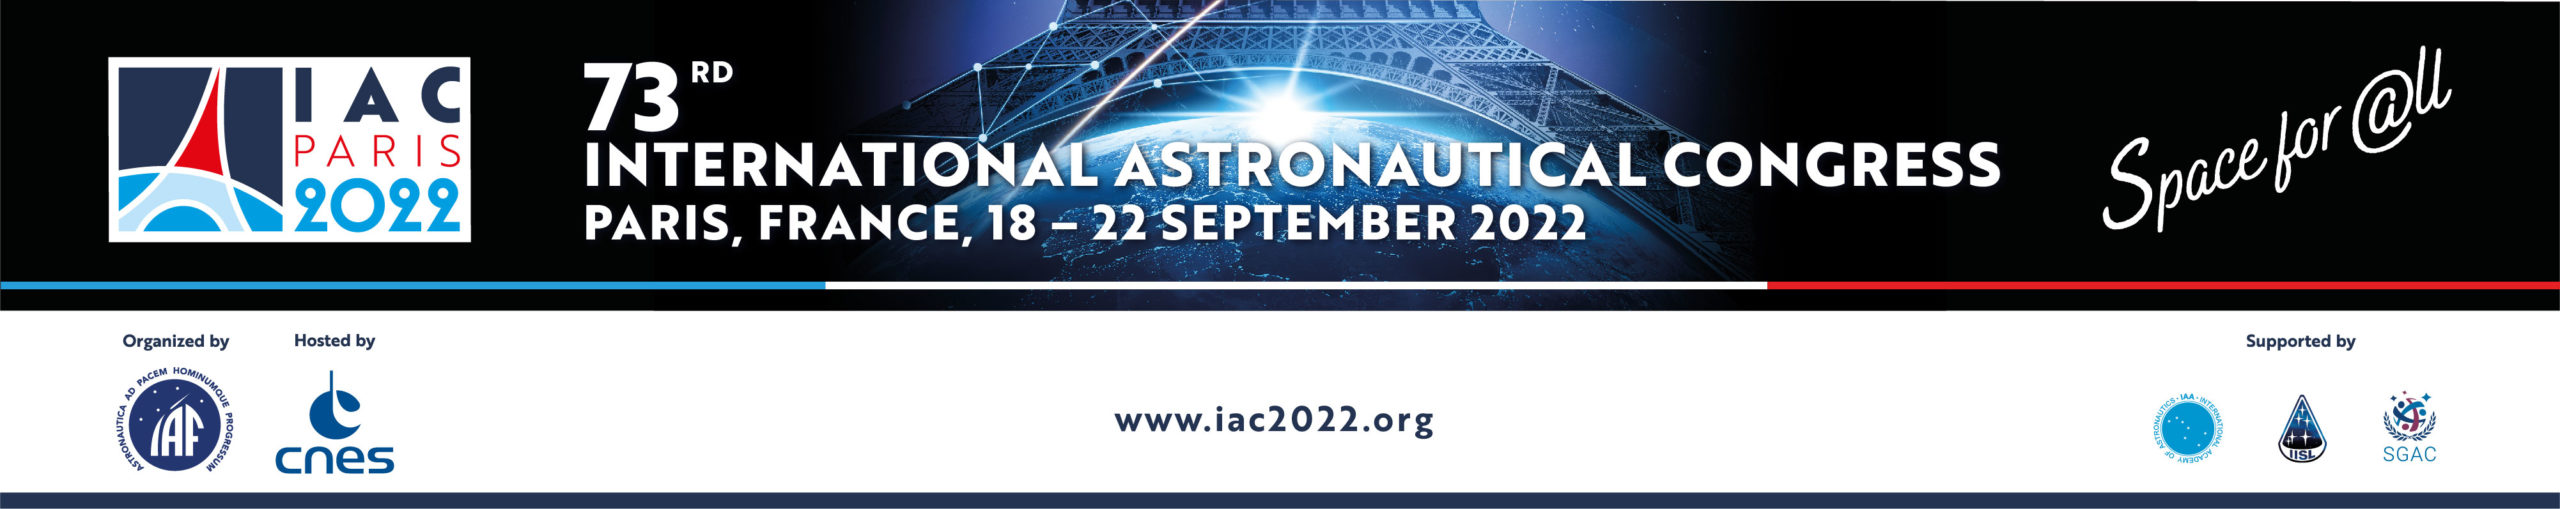 ArianeGroup at IAC 2022 in Paris